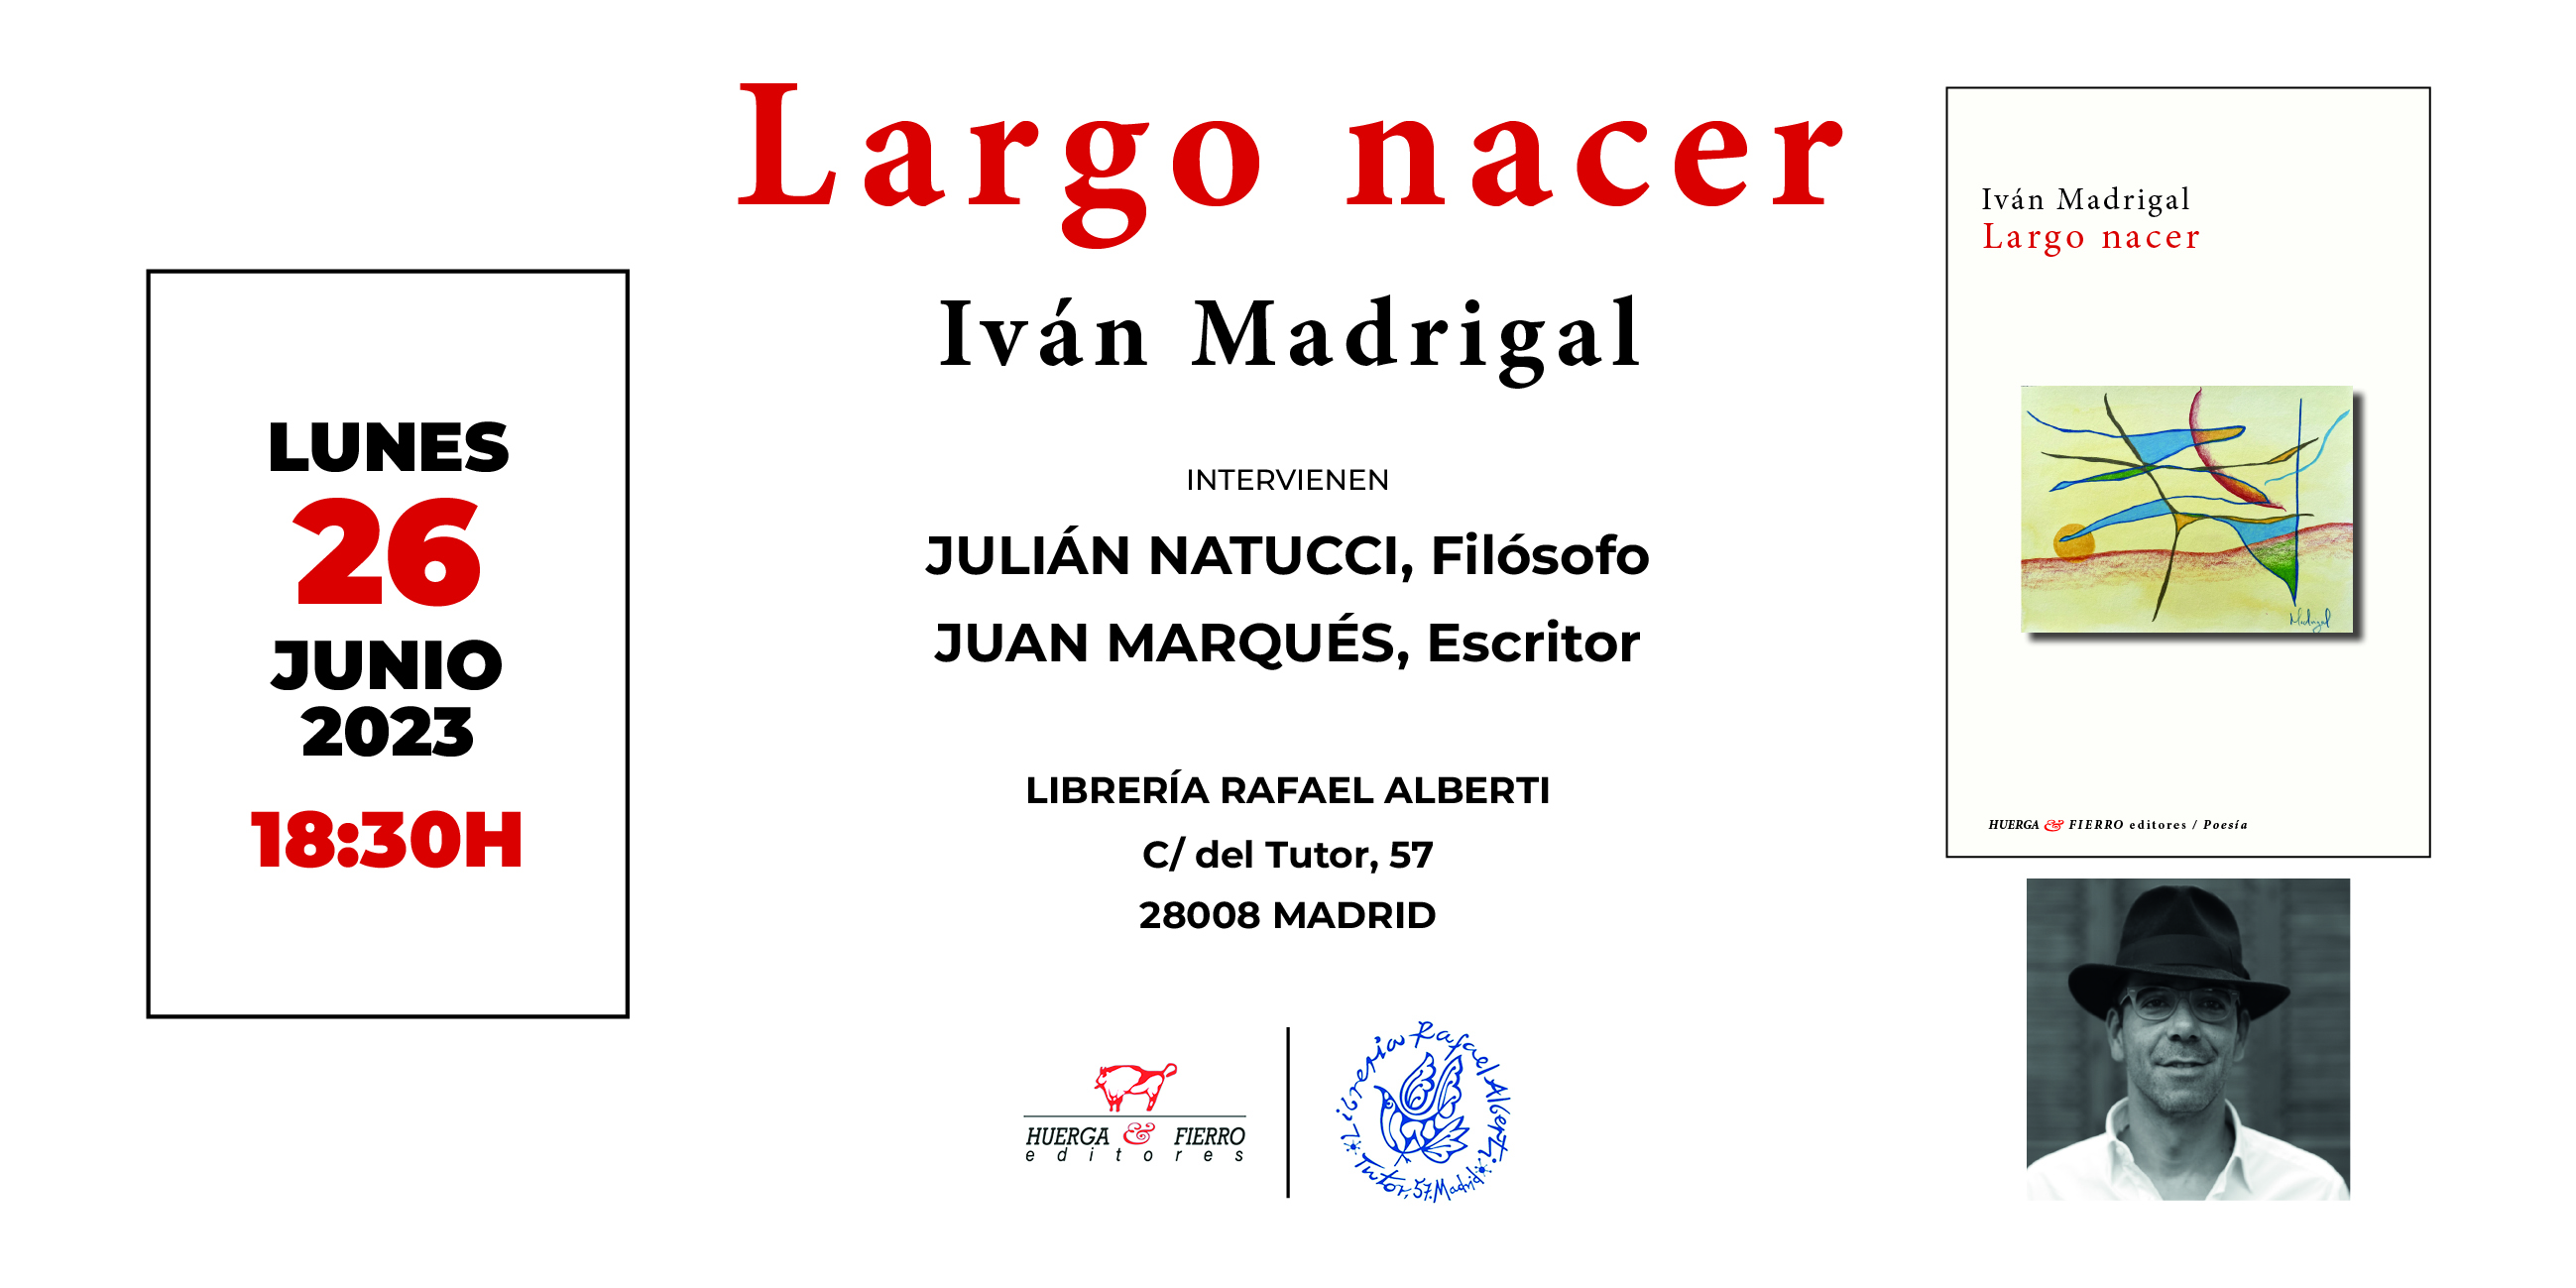 IVÁN MADRIGAL, Largo nacer (Huerga & Fierro)